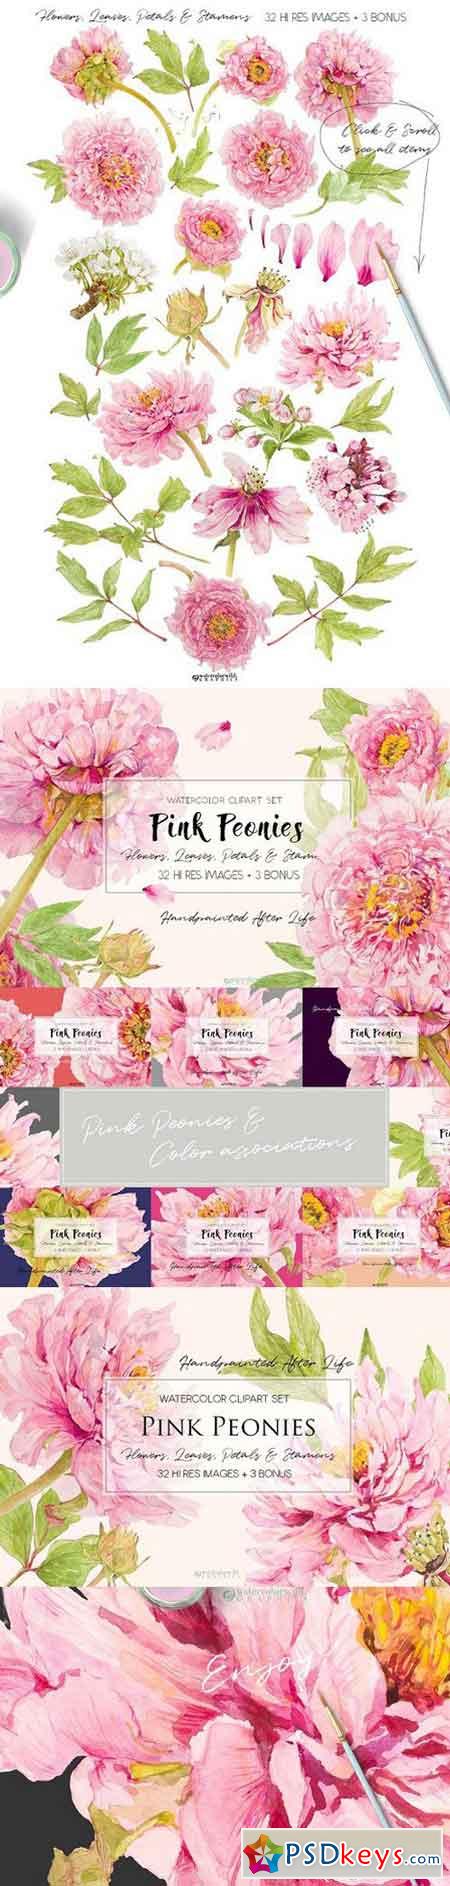 Pink Peonies-Clipart Set 1518921